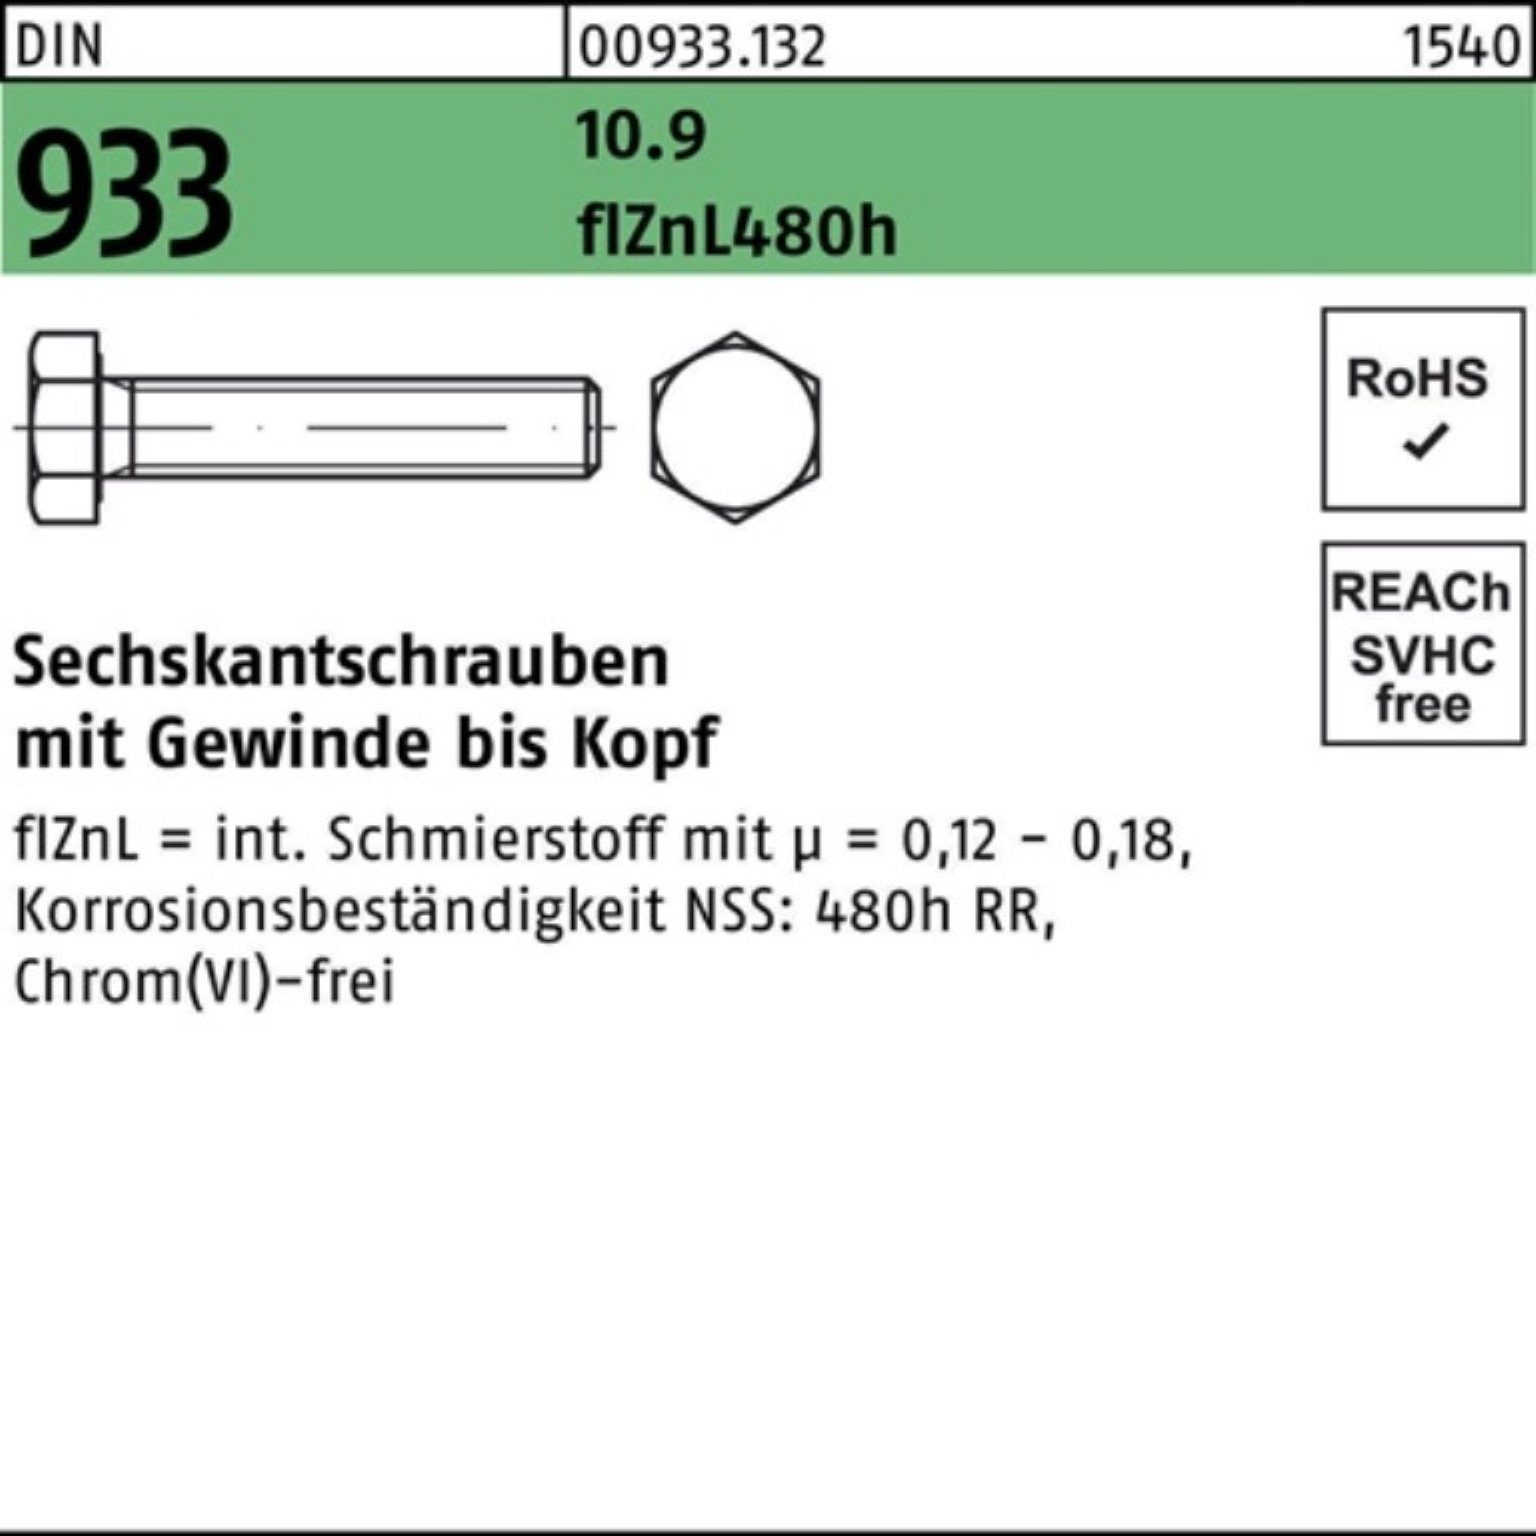 Reyher Sechskantschraube 500er Pack Sechskantschraube DIN 933 VG M6x 12 10.9 flZnL/nc/x/x/480h